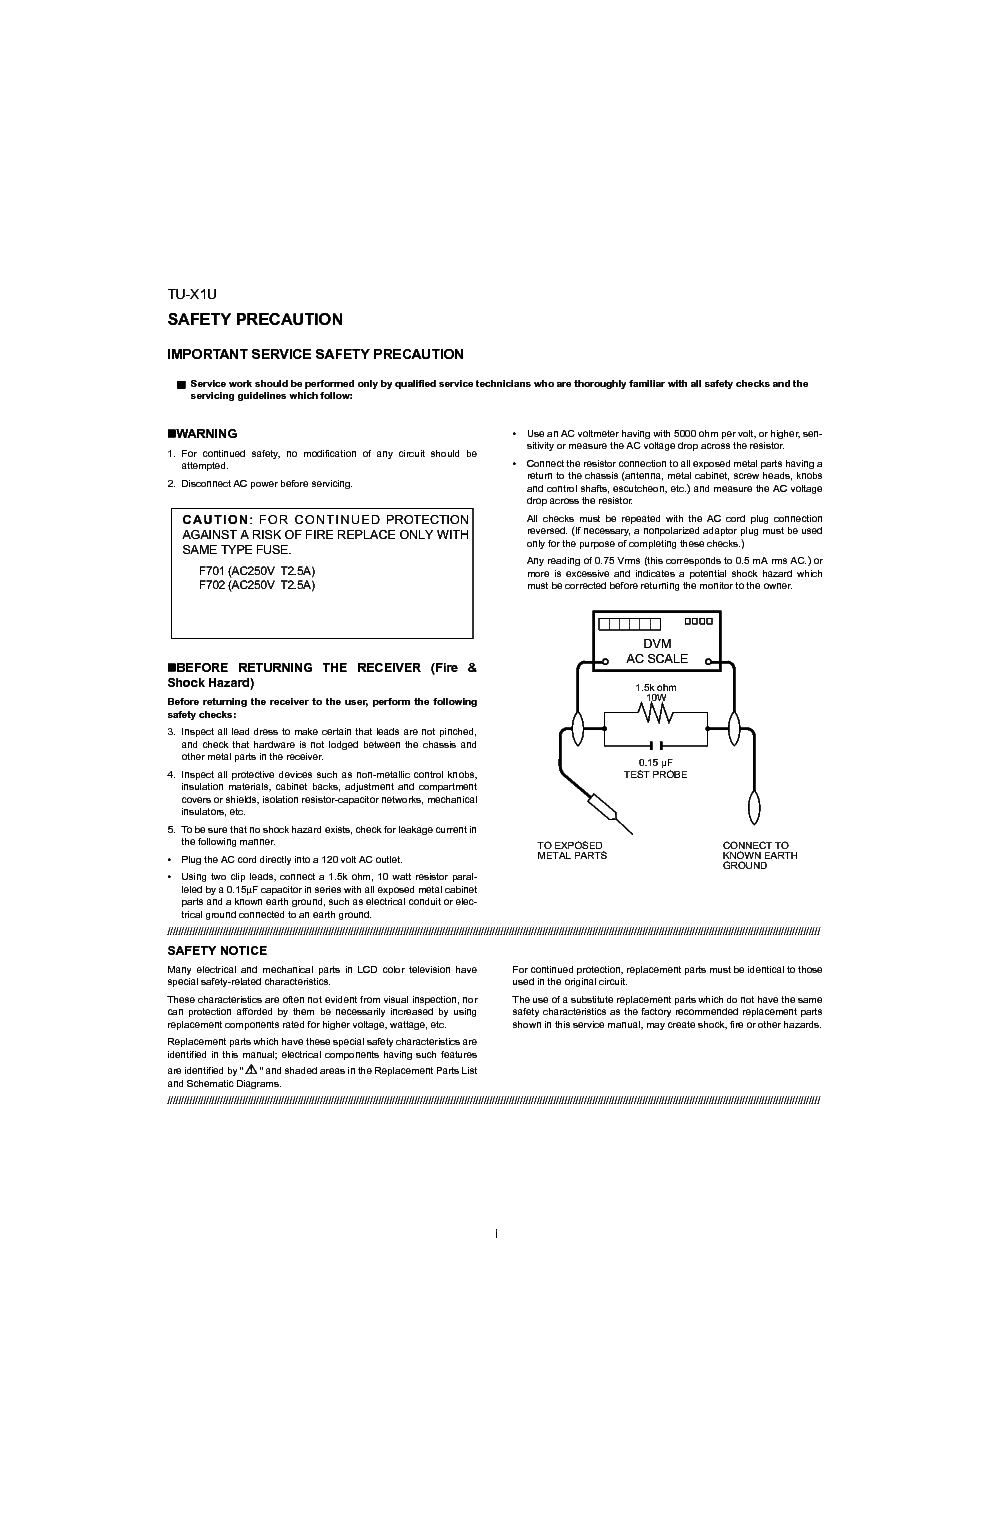 SHARP TU-X1U service manual (2nd page)